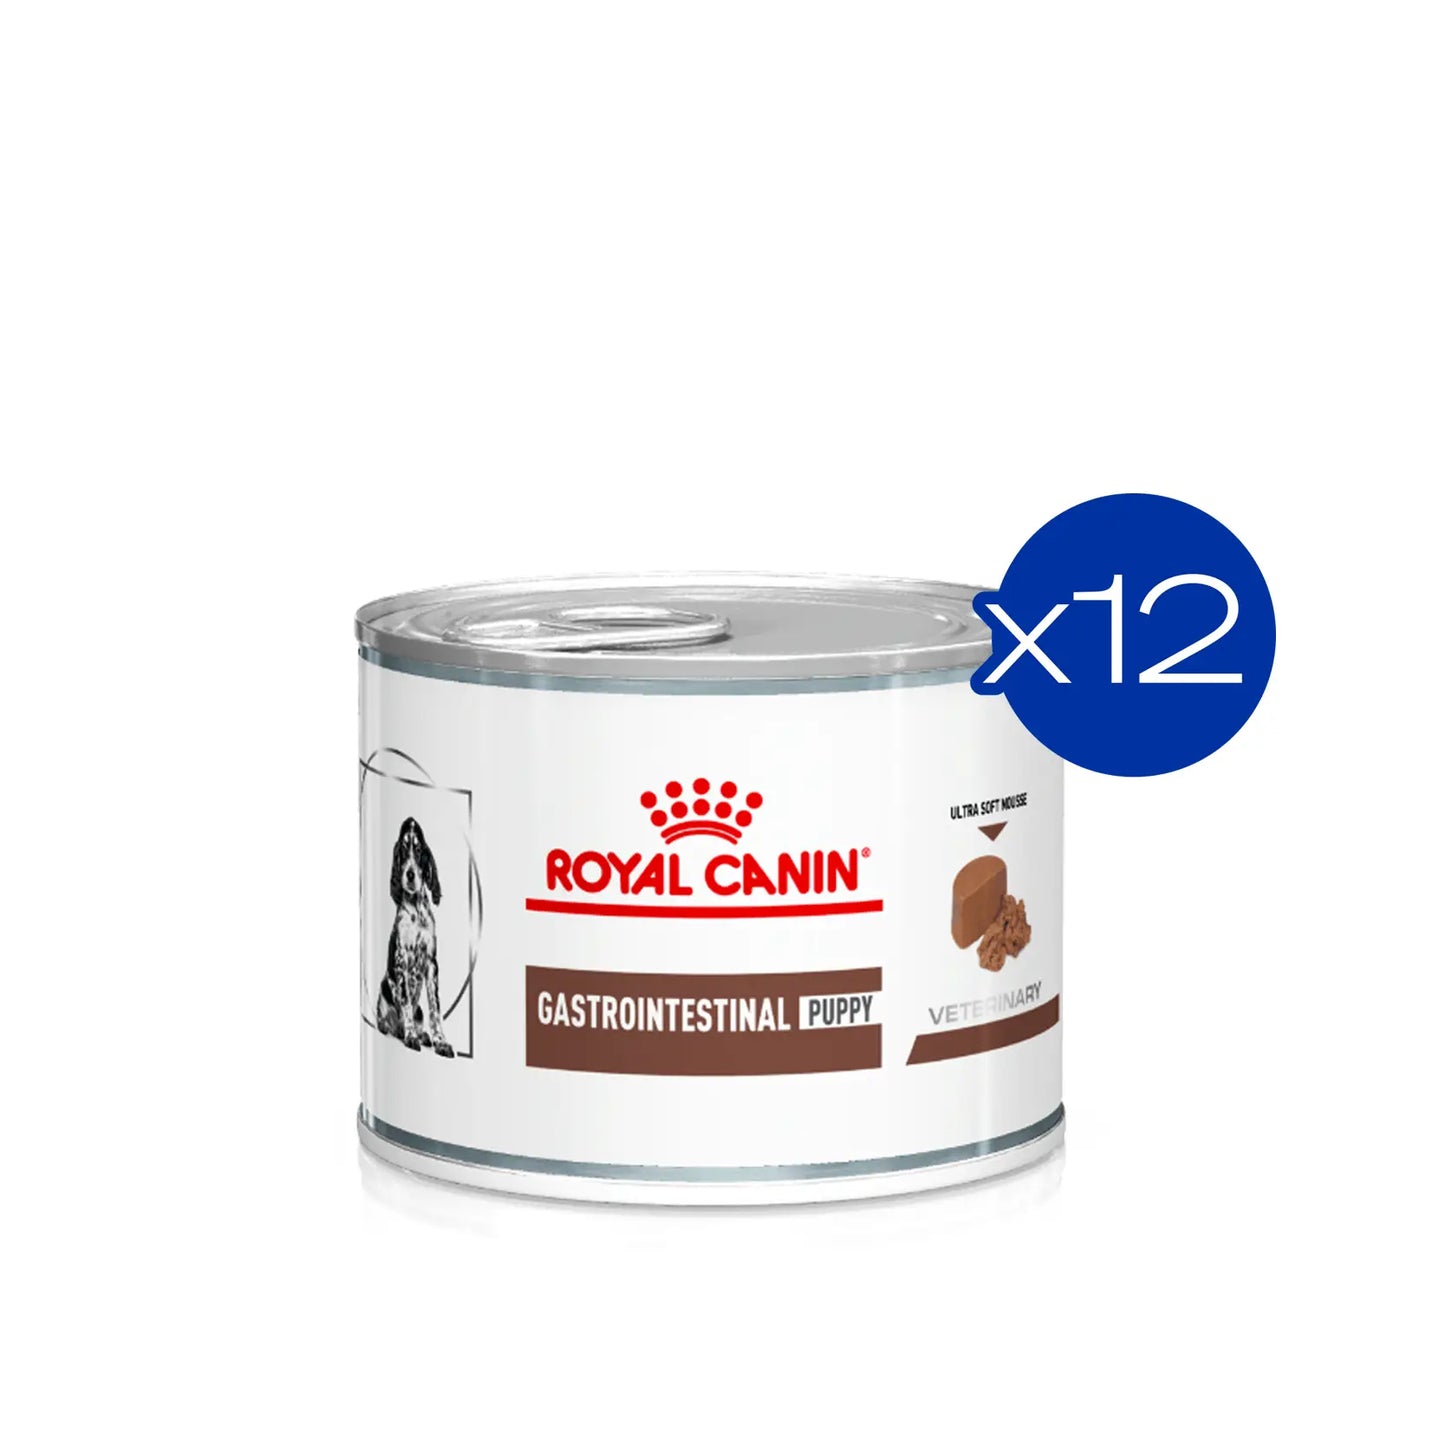 Royal Canin - Canine Gastro Intestinal Puppy 195g